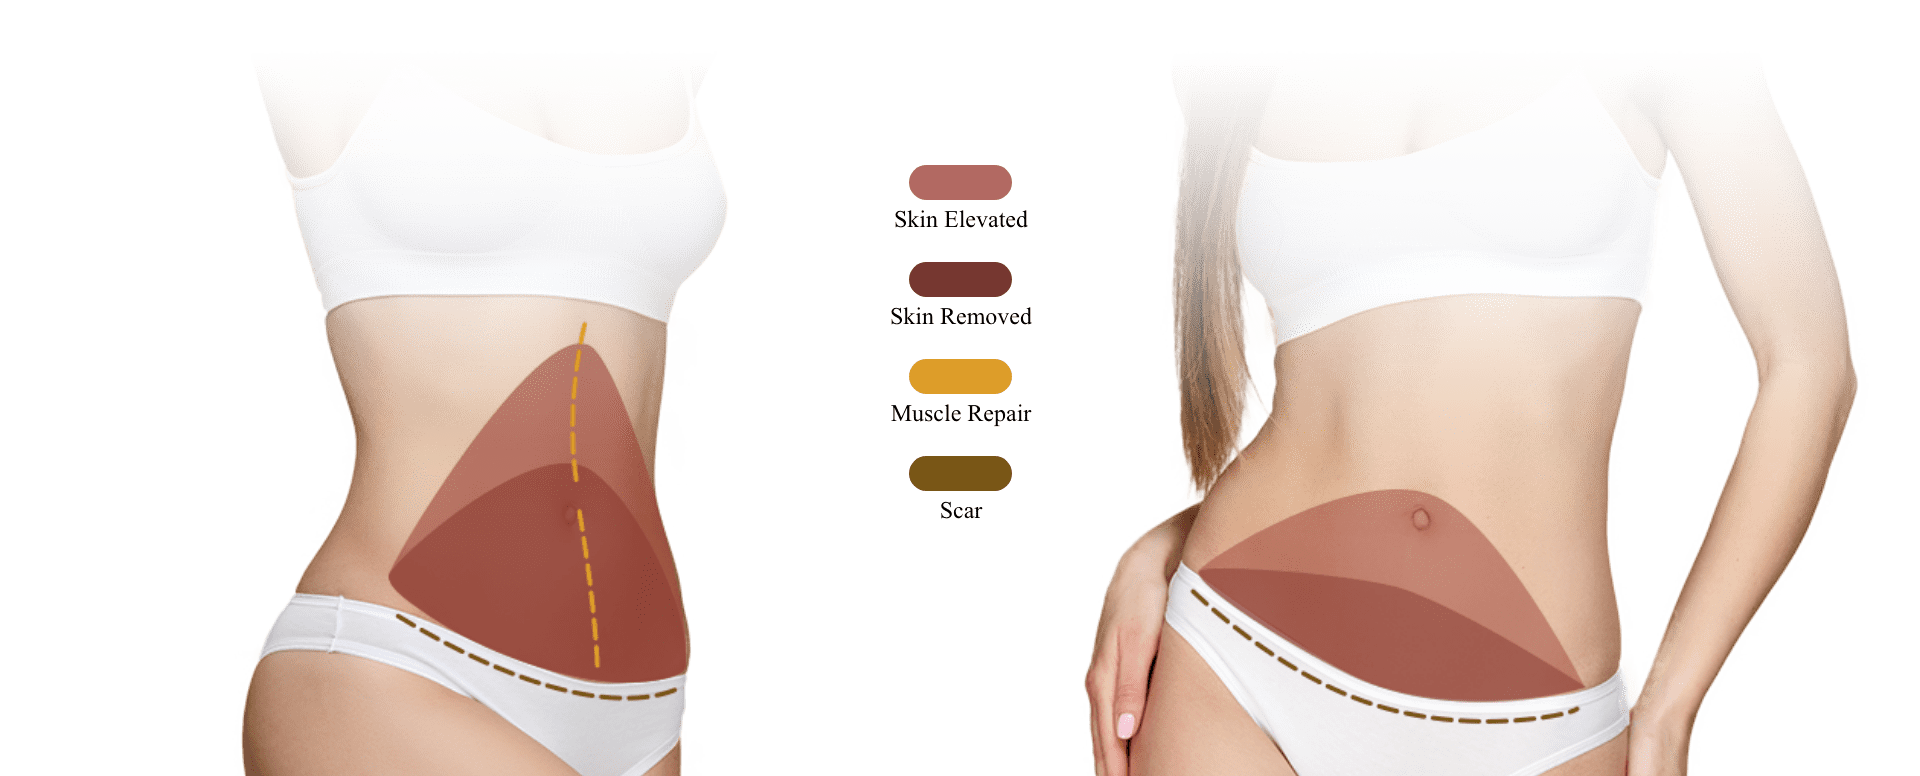 Belt For Tummy Tuck - Flank Or Abdominal Liposuction